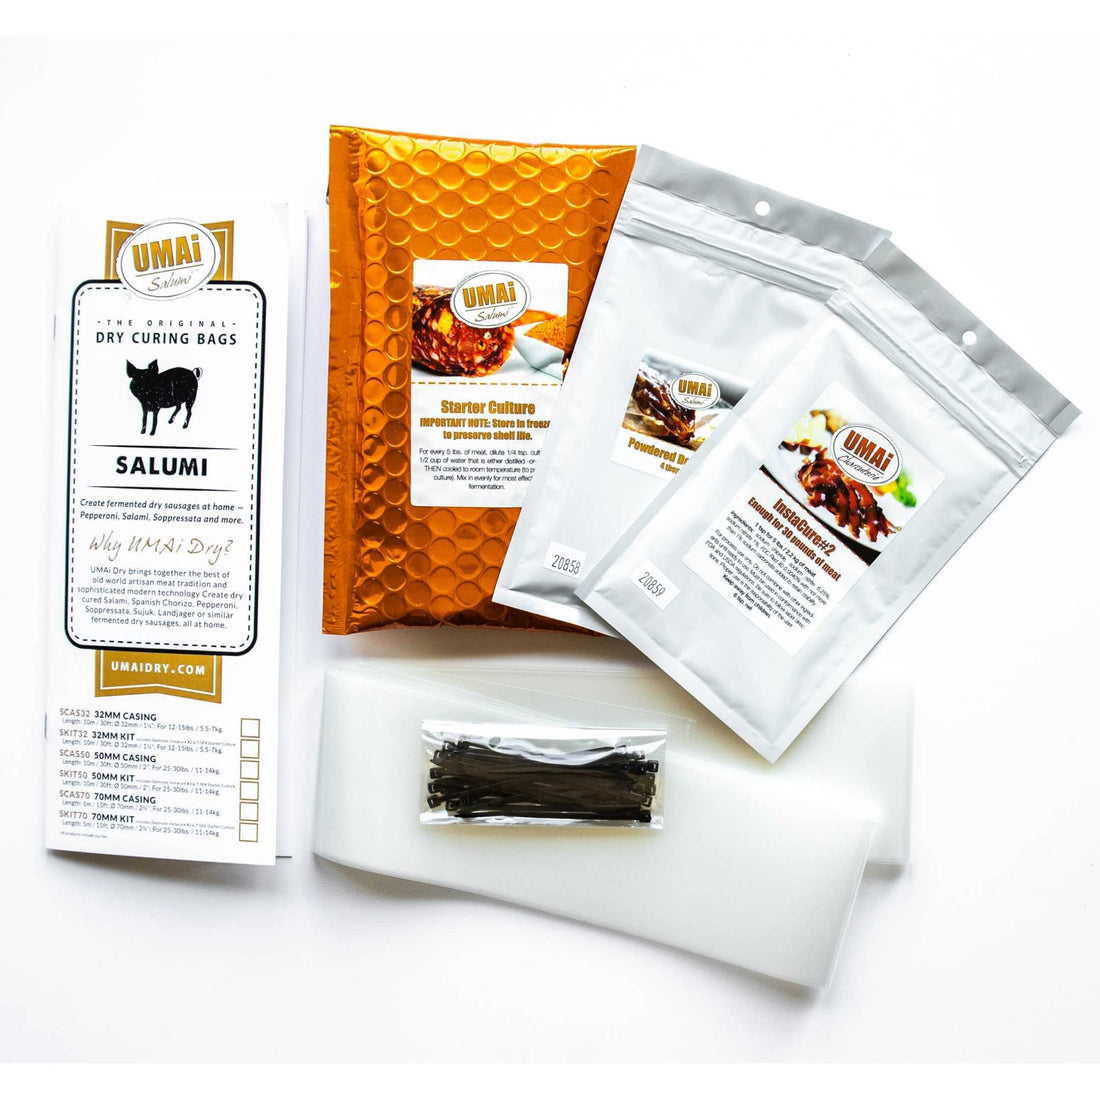 UMAi Dry®  Dry Aging Bags Brisket/Bone-in